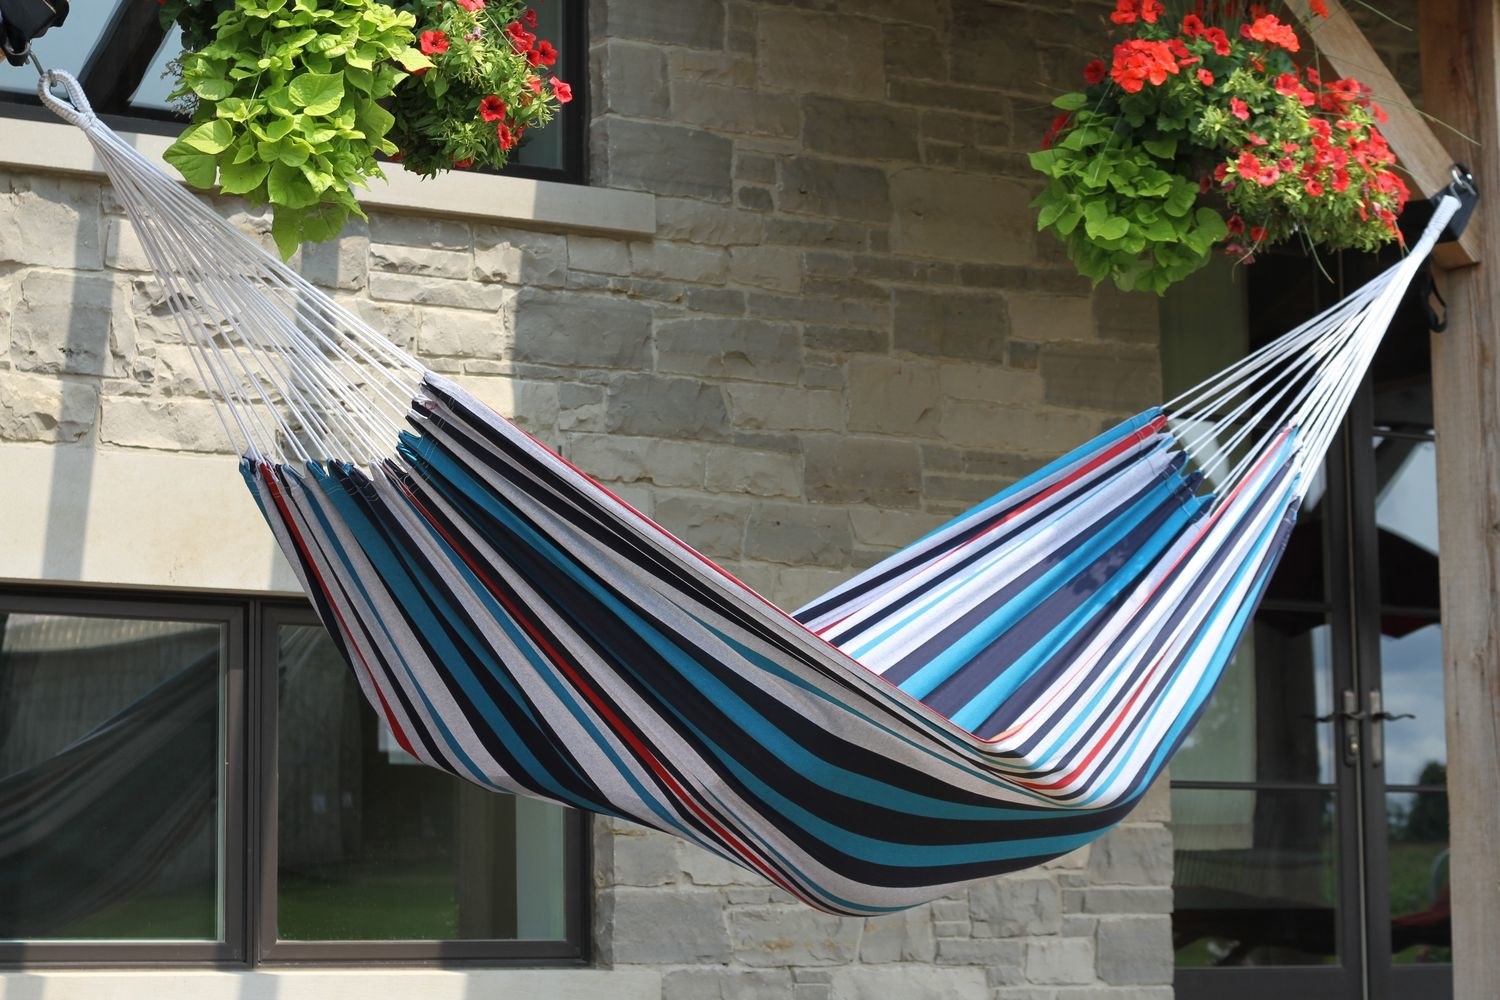 The hammock on a patio outside a house